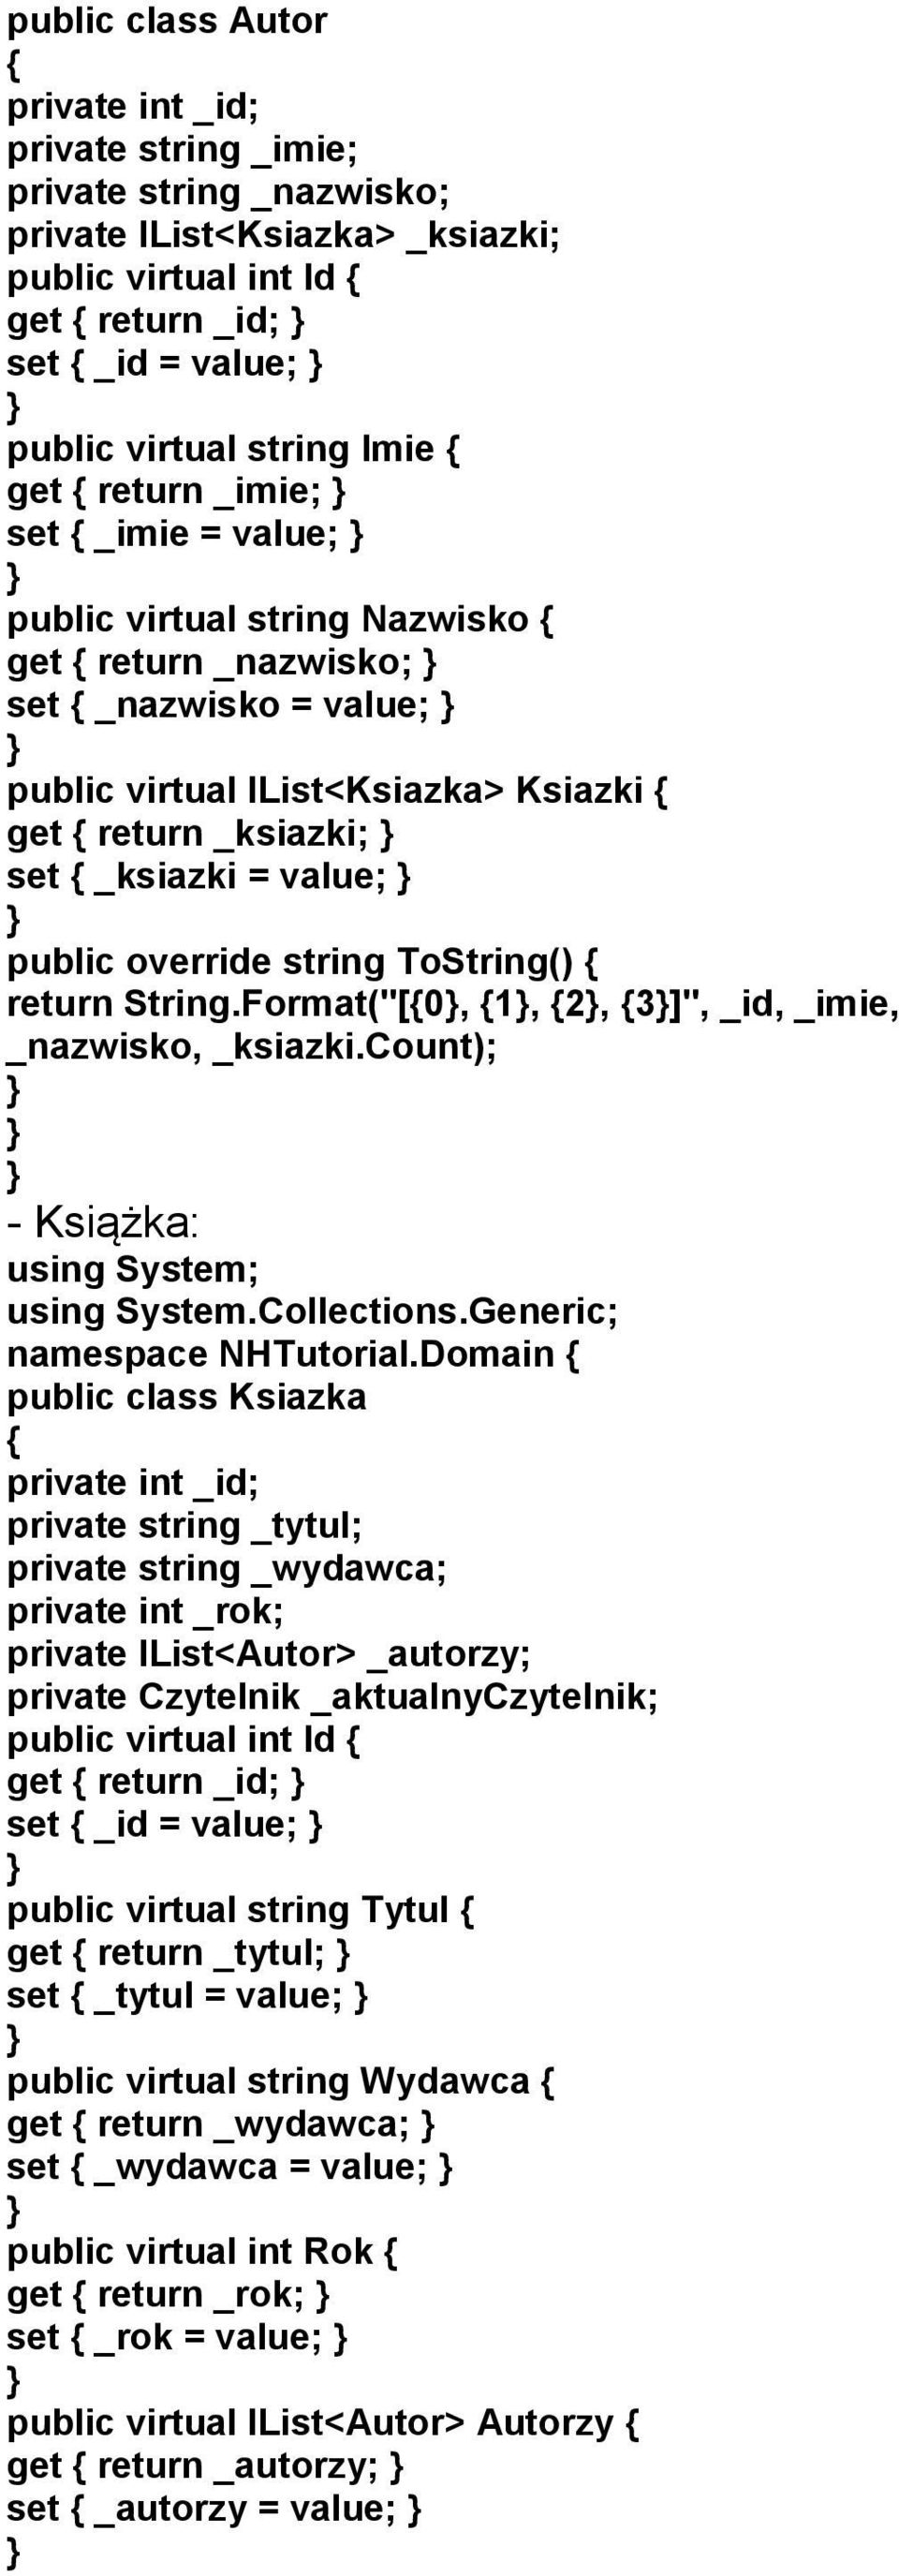 public override string ToString() return String.Format("[0, 1, 2, 3]", _id, _imie, _nazwisko, _ksiazki.count); - Książka: using System; using System.Collections.Generic; namespace NHTutorial.